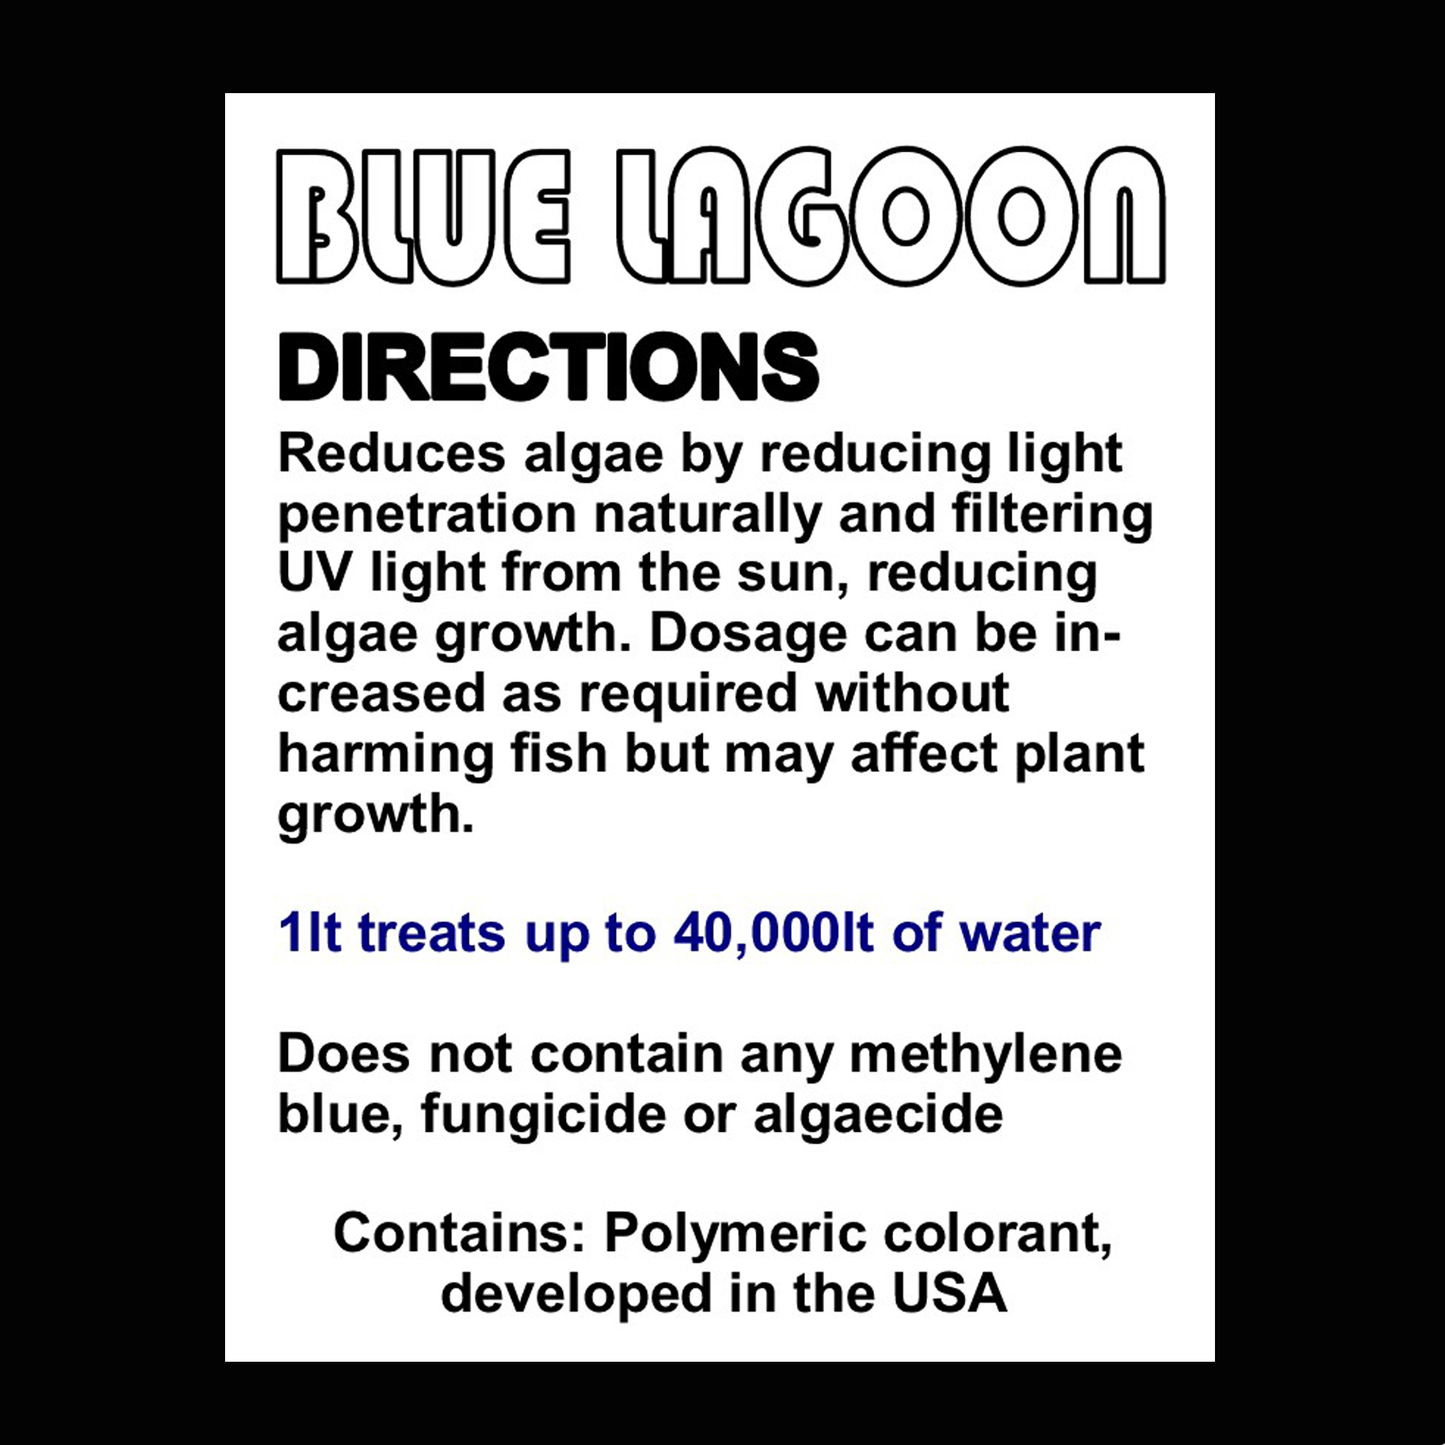 Blue Lagoon Block out blue pond dye 2 litre